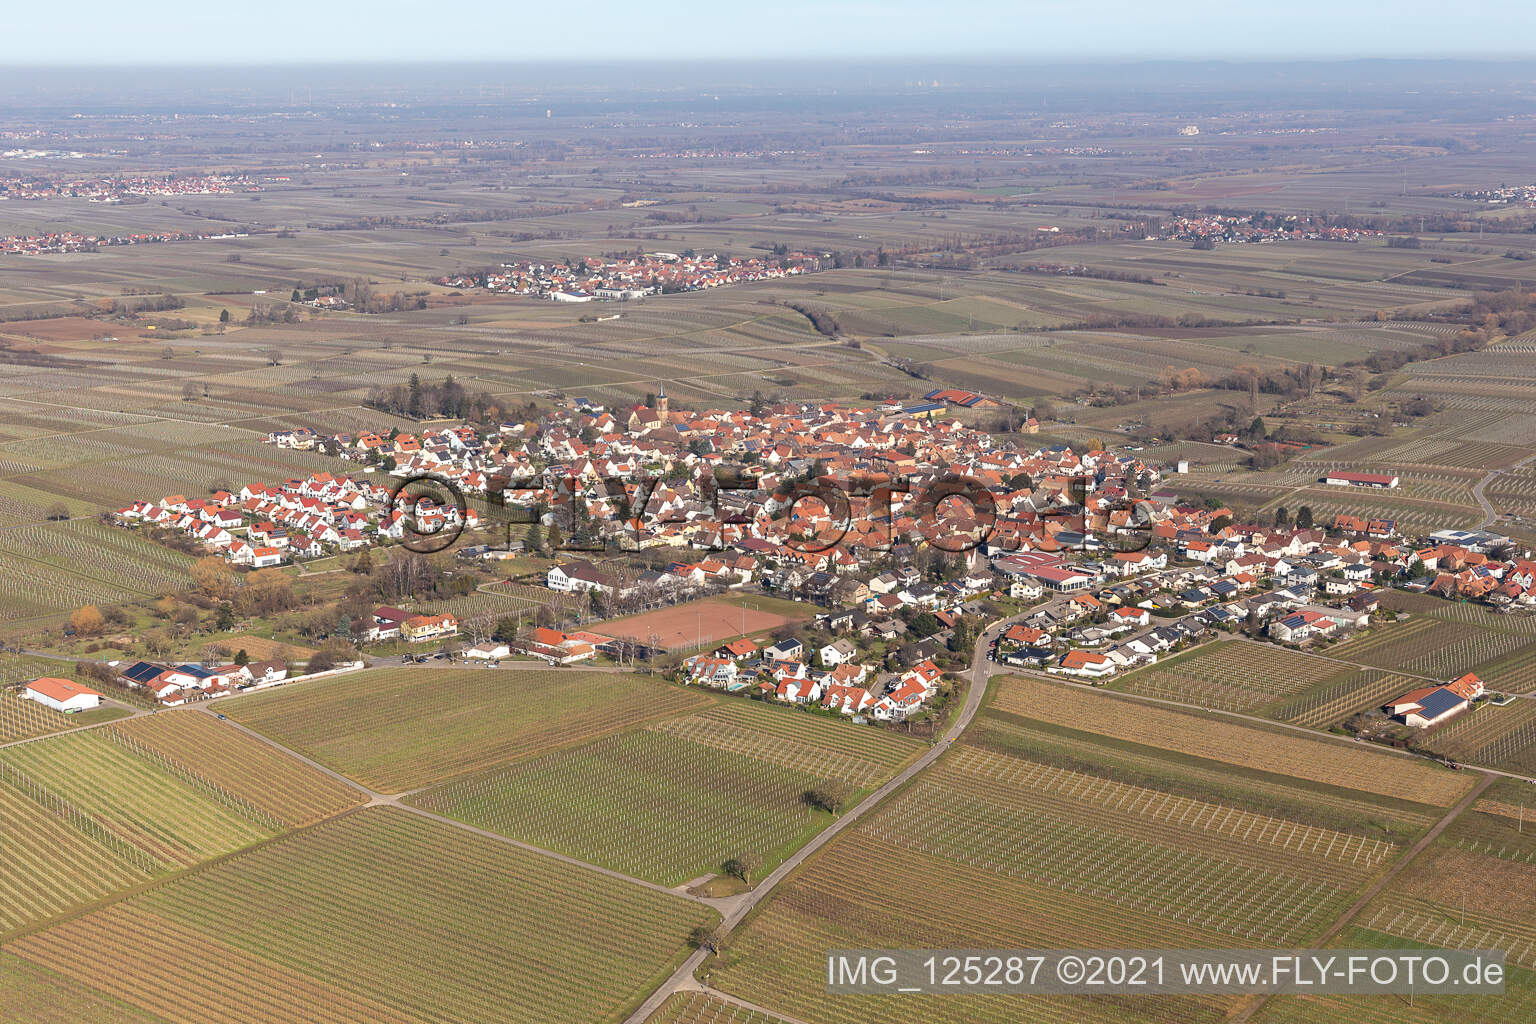 District Nußdorf in Landau in der Pfalz in the state Rhineland-Palatinate, Germany from above